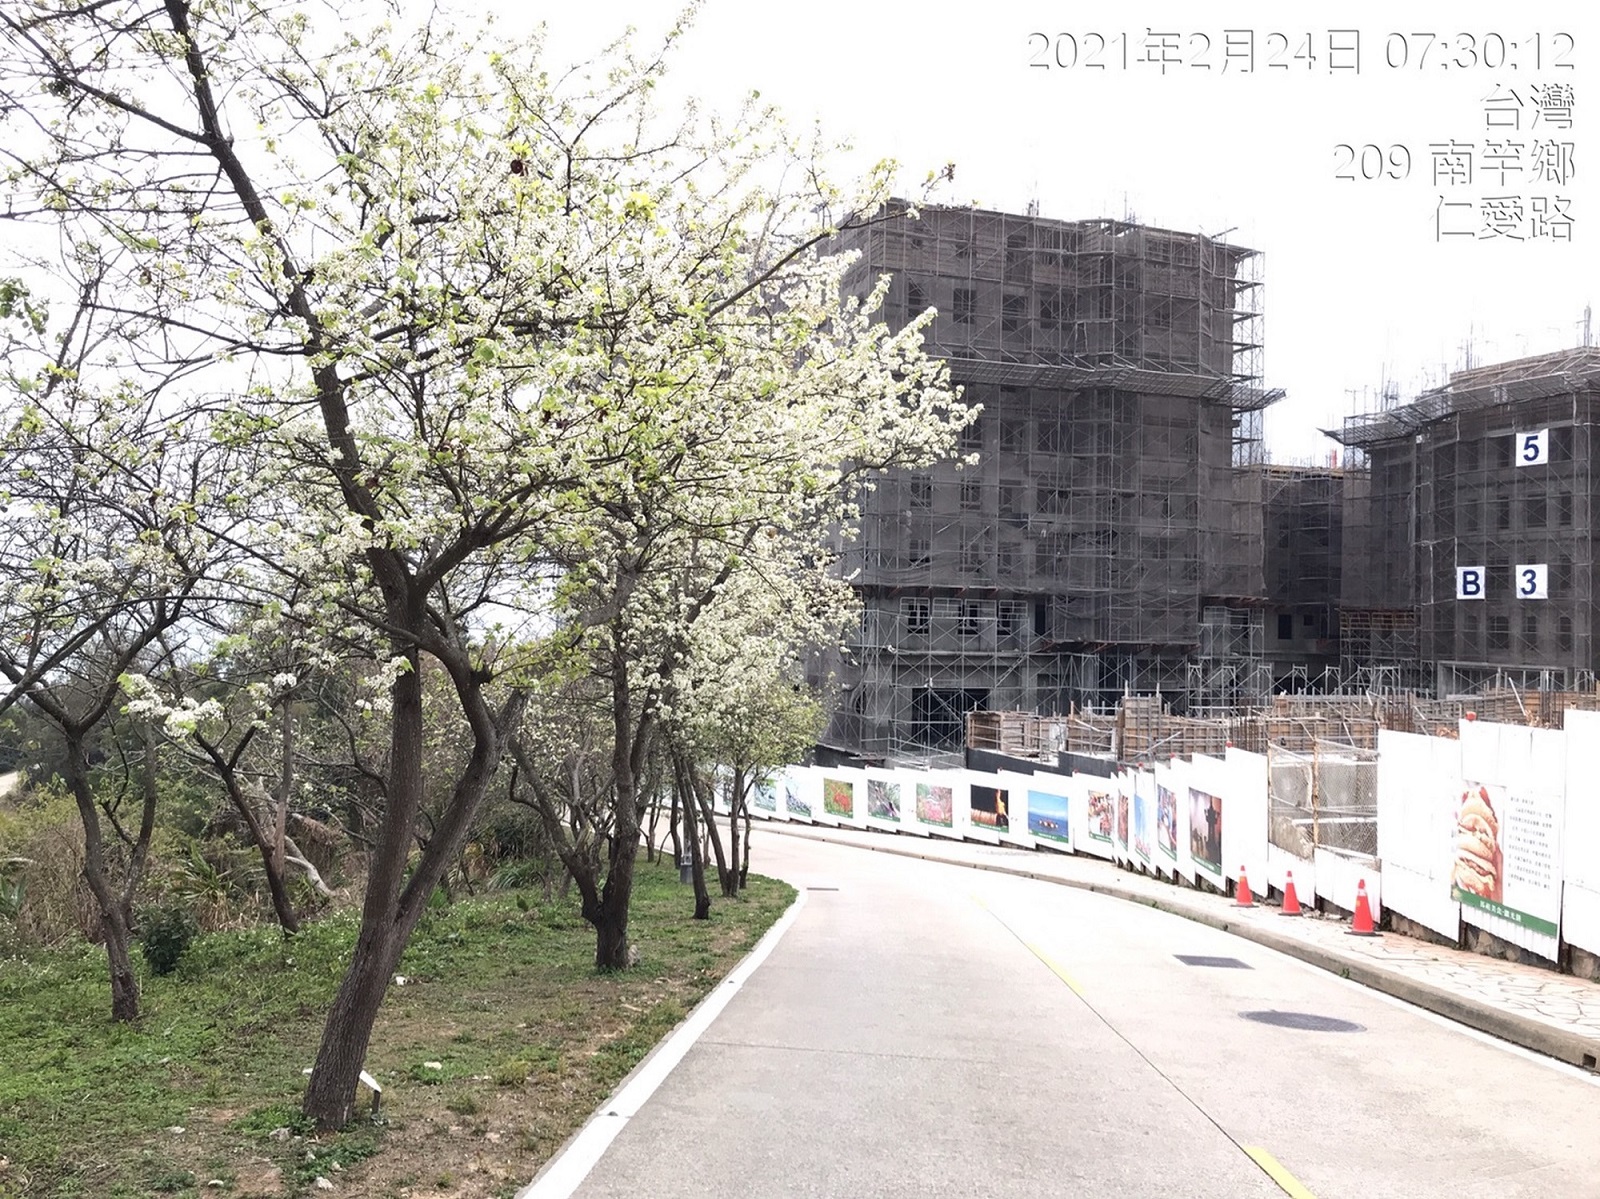 CONSTRUCTION ORDER TAIWAN